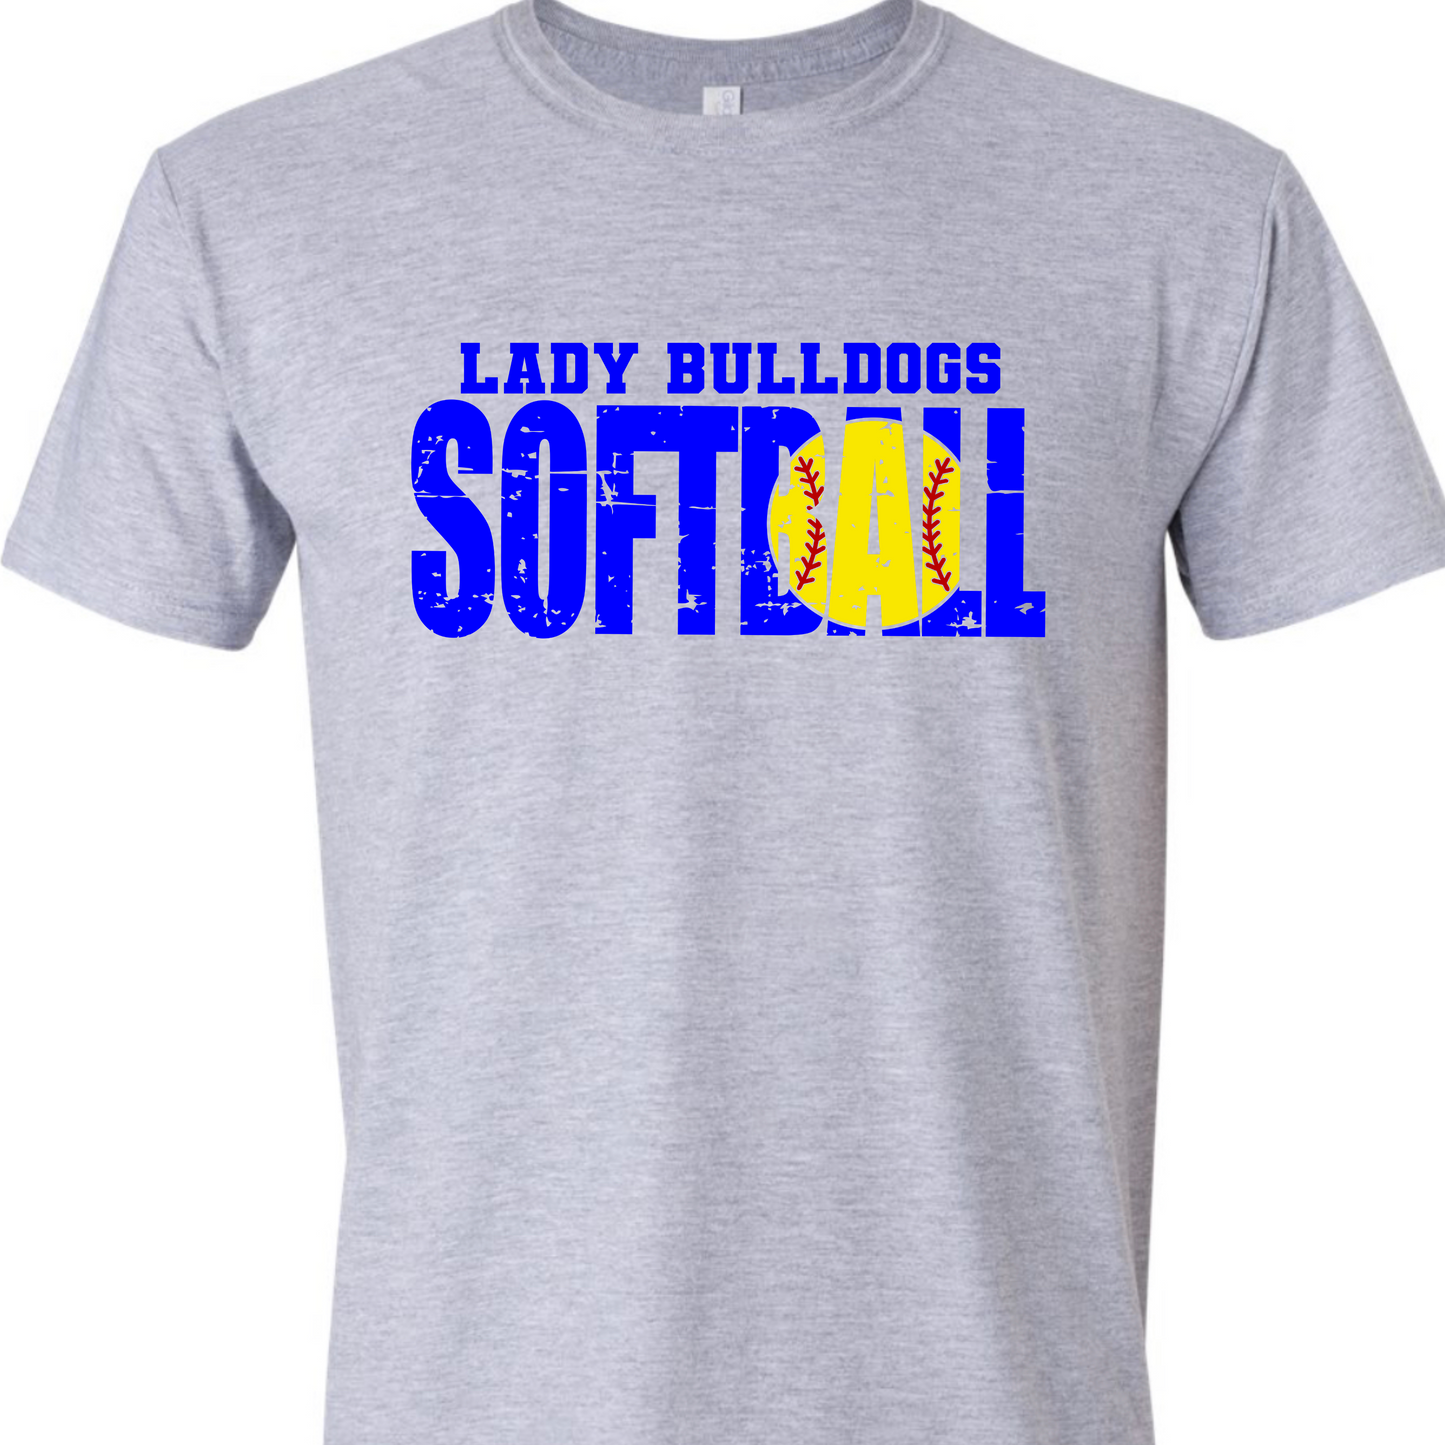 Lady Bulldogs Softball 🥎 graphic t-shirt